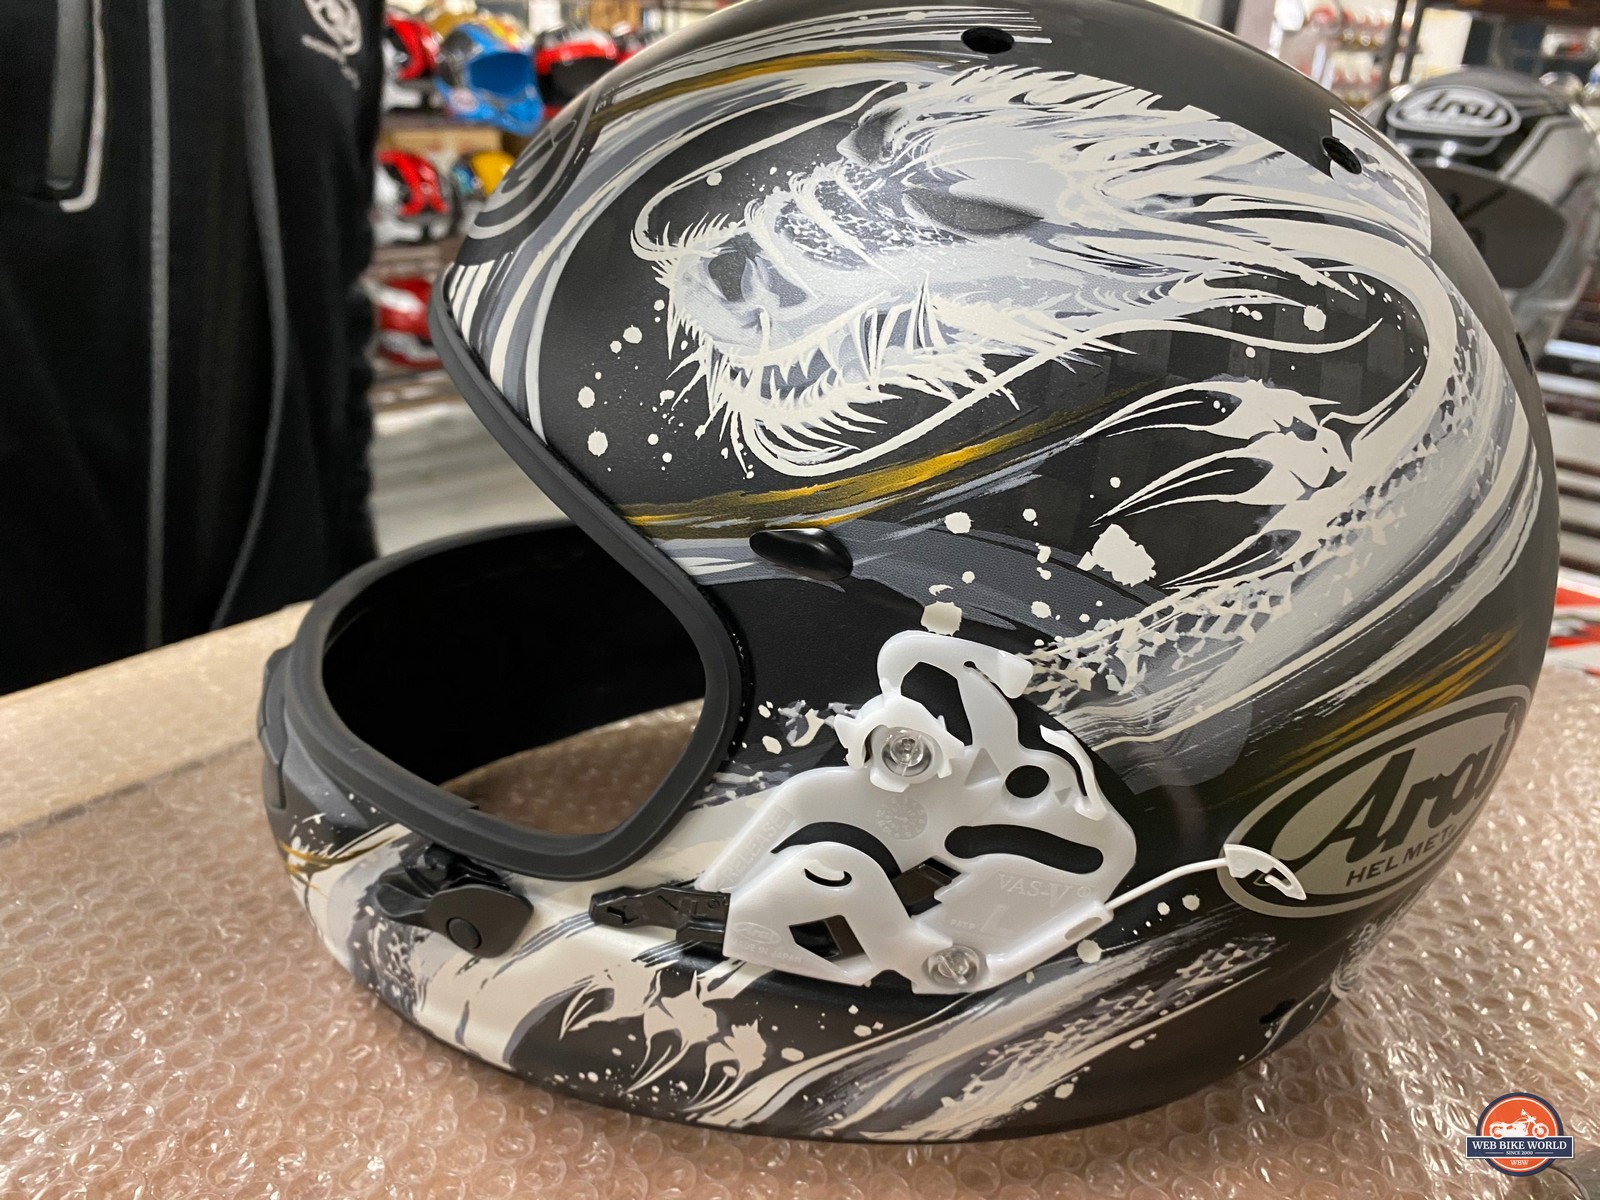 Kiyonari dragon decals on an Arai helmet.